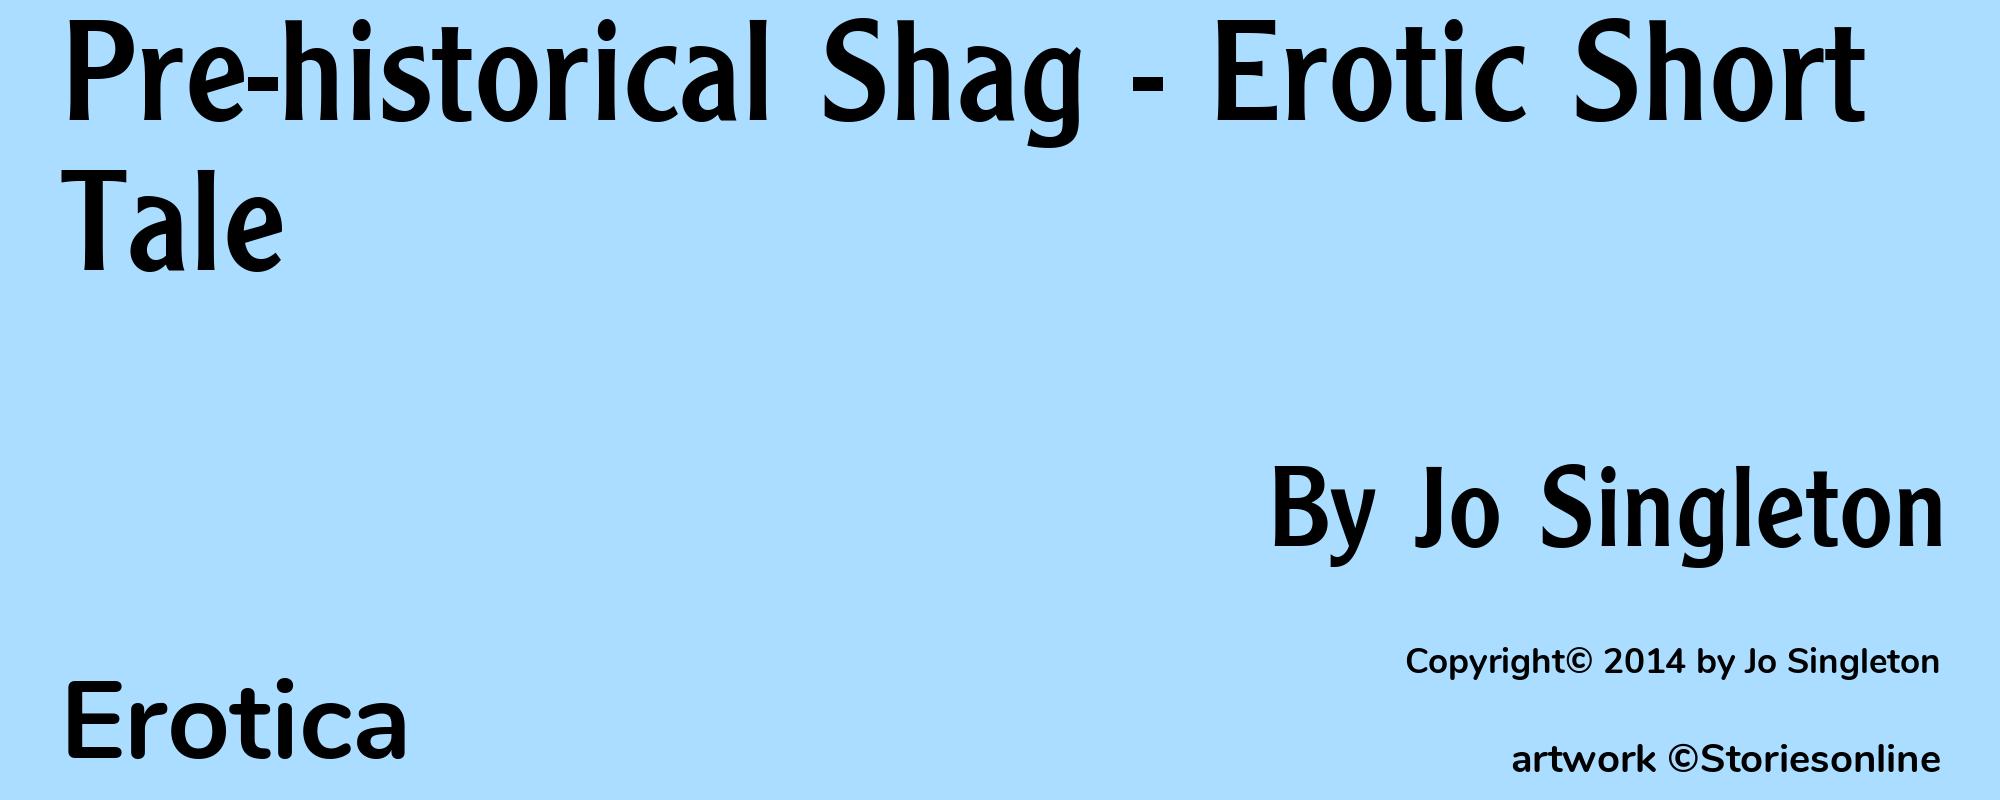 Pre-historical Shag - Erotic Short Tale - Cover